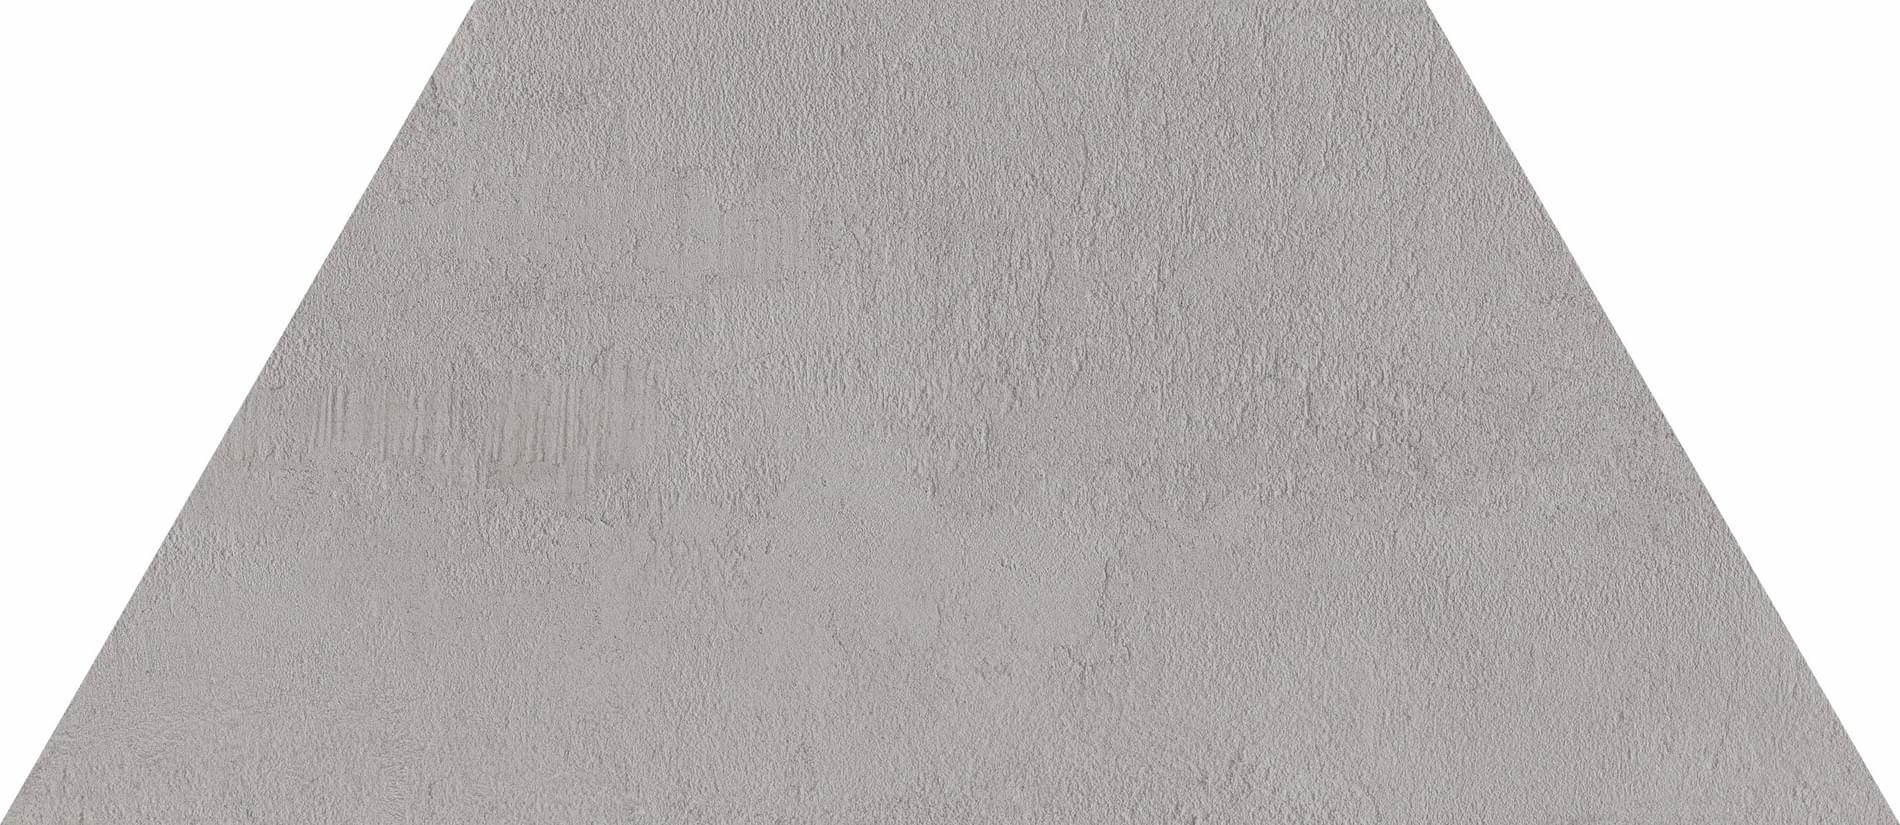 Керамогранит ABK Crossroad Chalk Grey Trapezio PF60000529, цвет серый, поверхность матовая, , 300x600